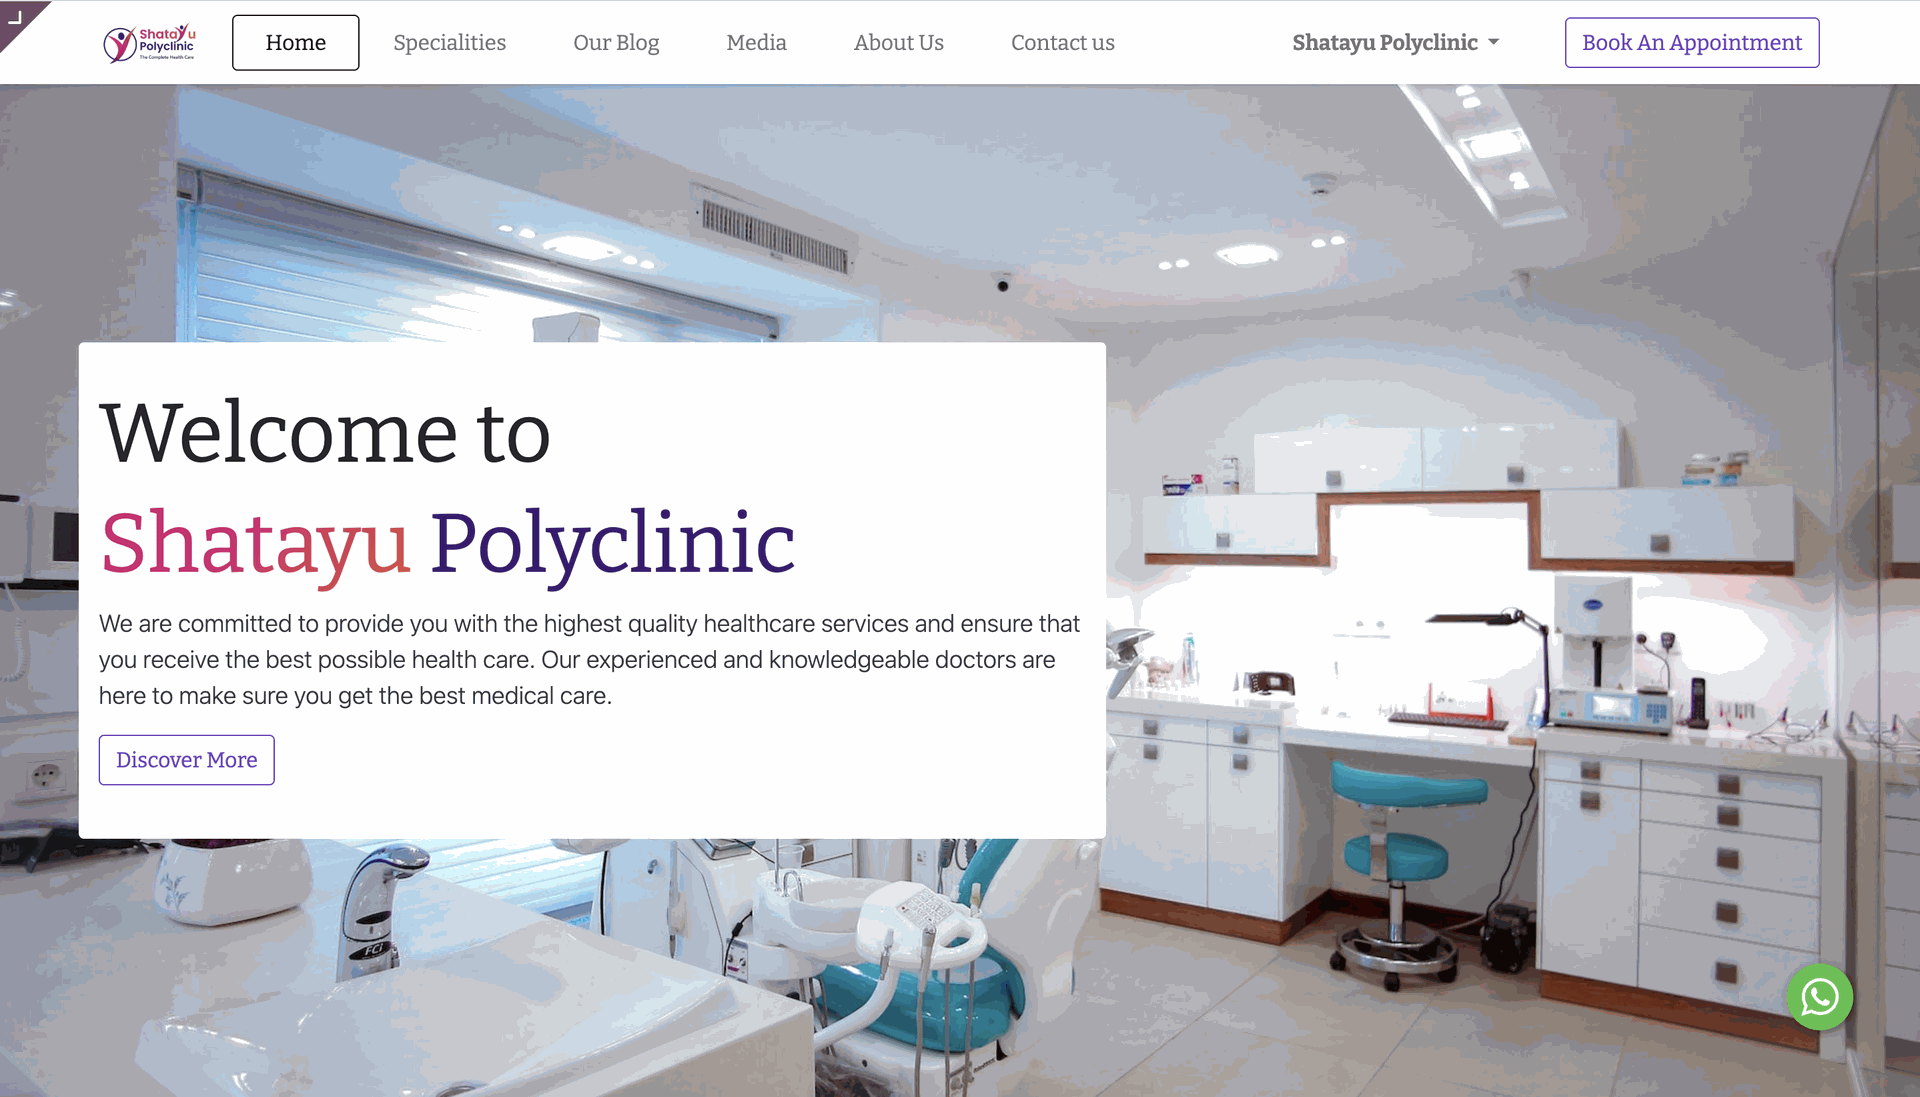 ShatayuPolyclinic.com website screenshot 